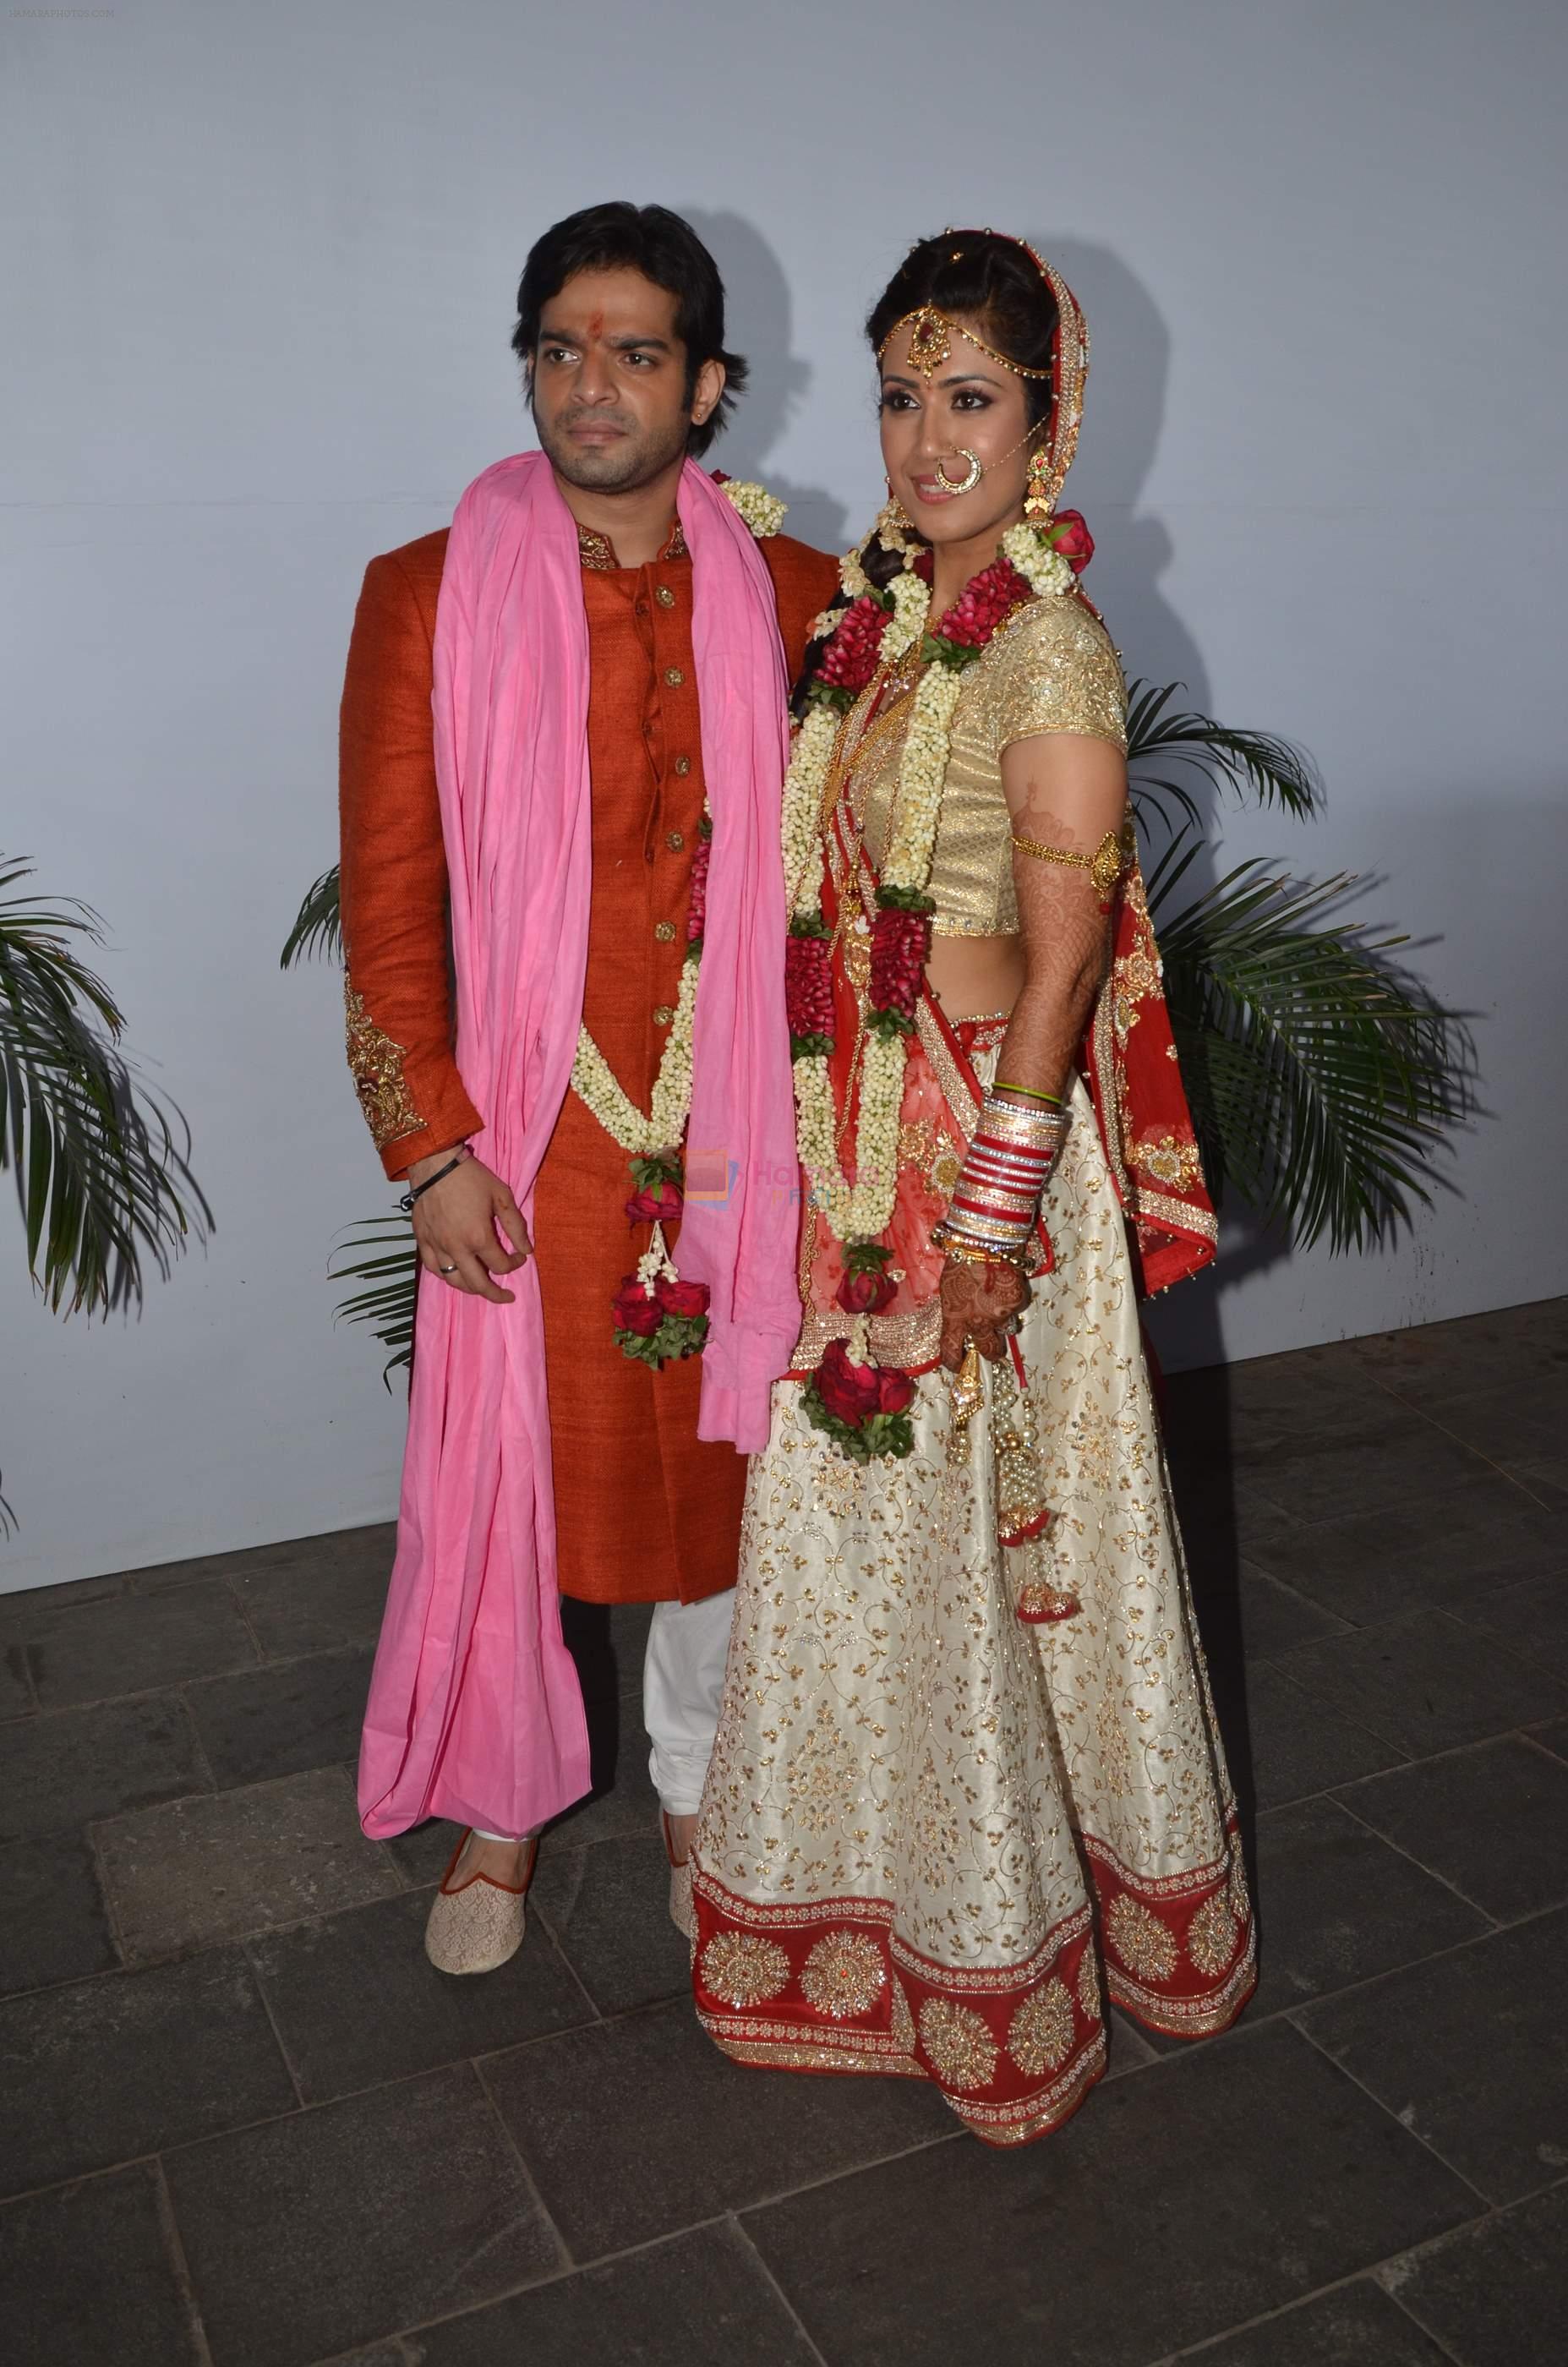 Karan Patel and Ankita Bhargava wedding on 3rd May 2015